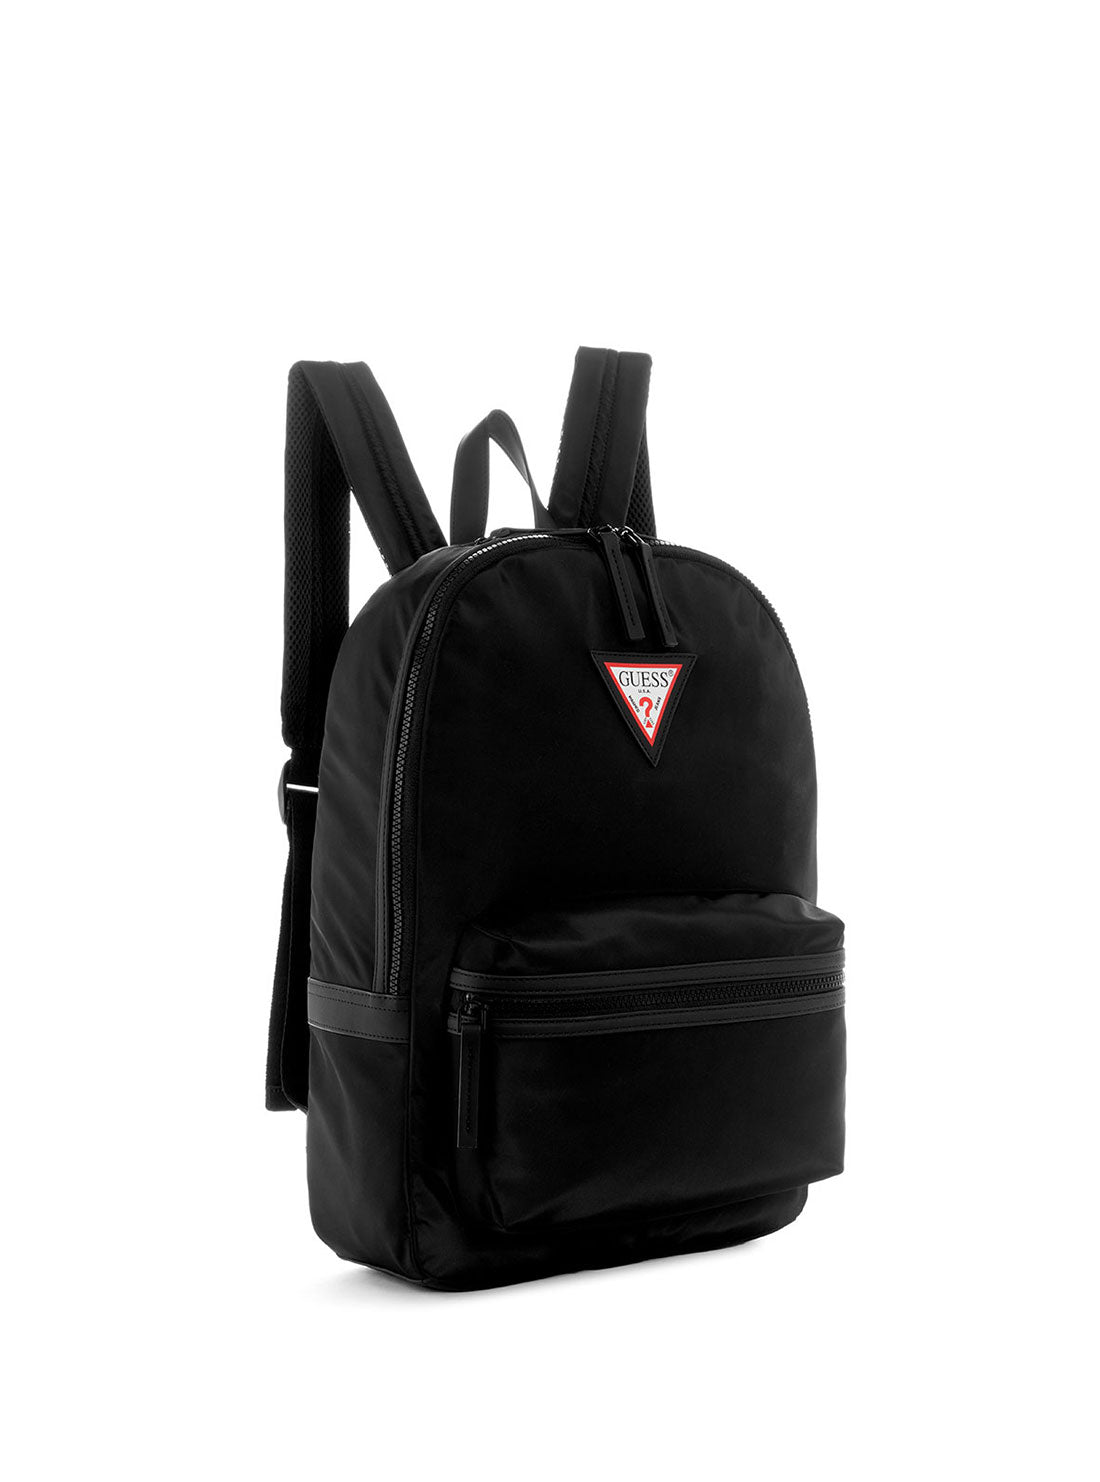 GUESS Men's Black Originals Backpack TS703198 Front Side View